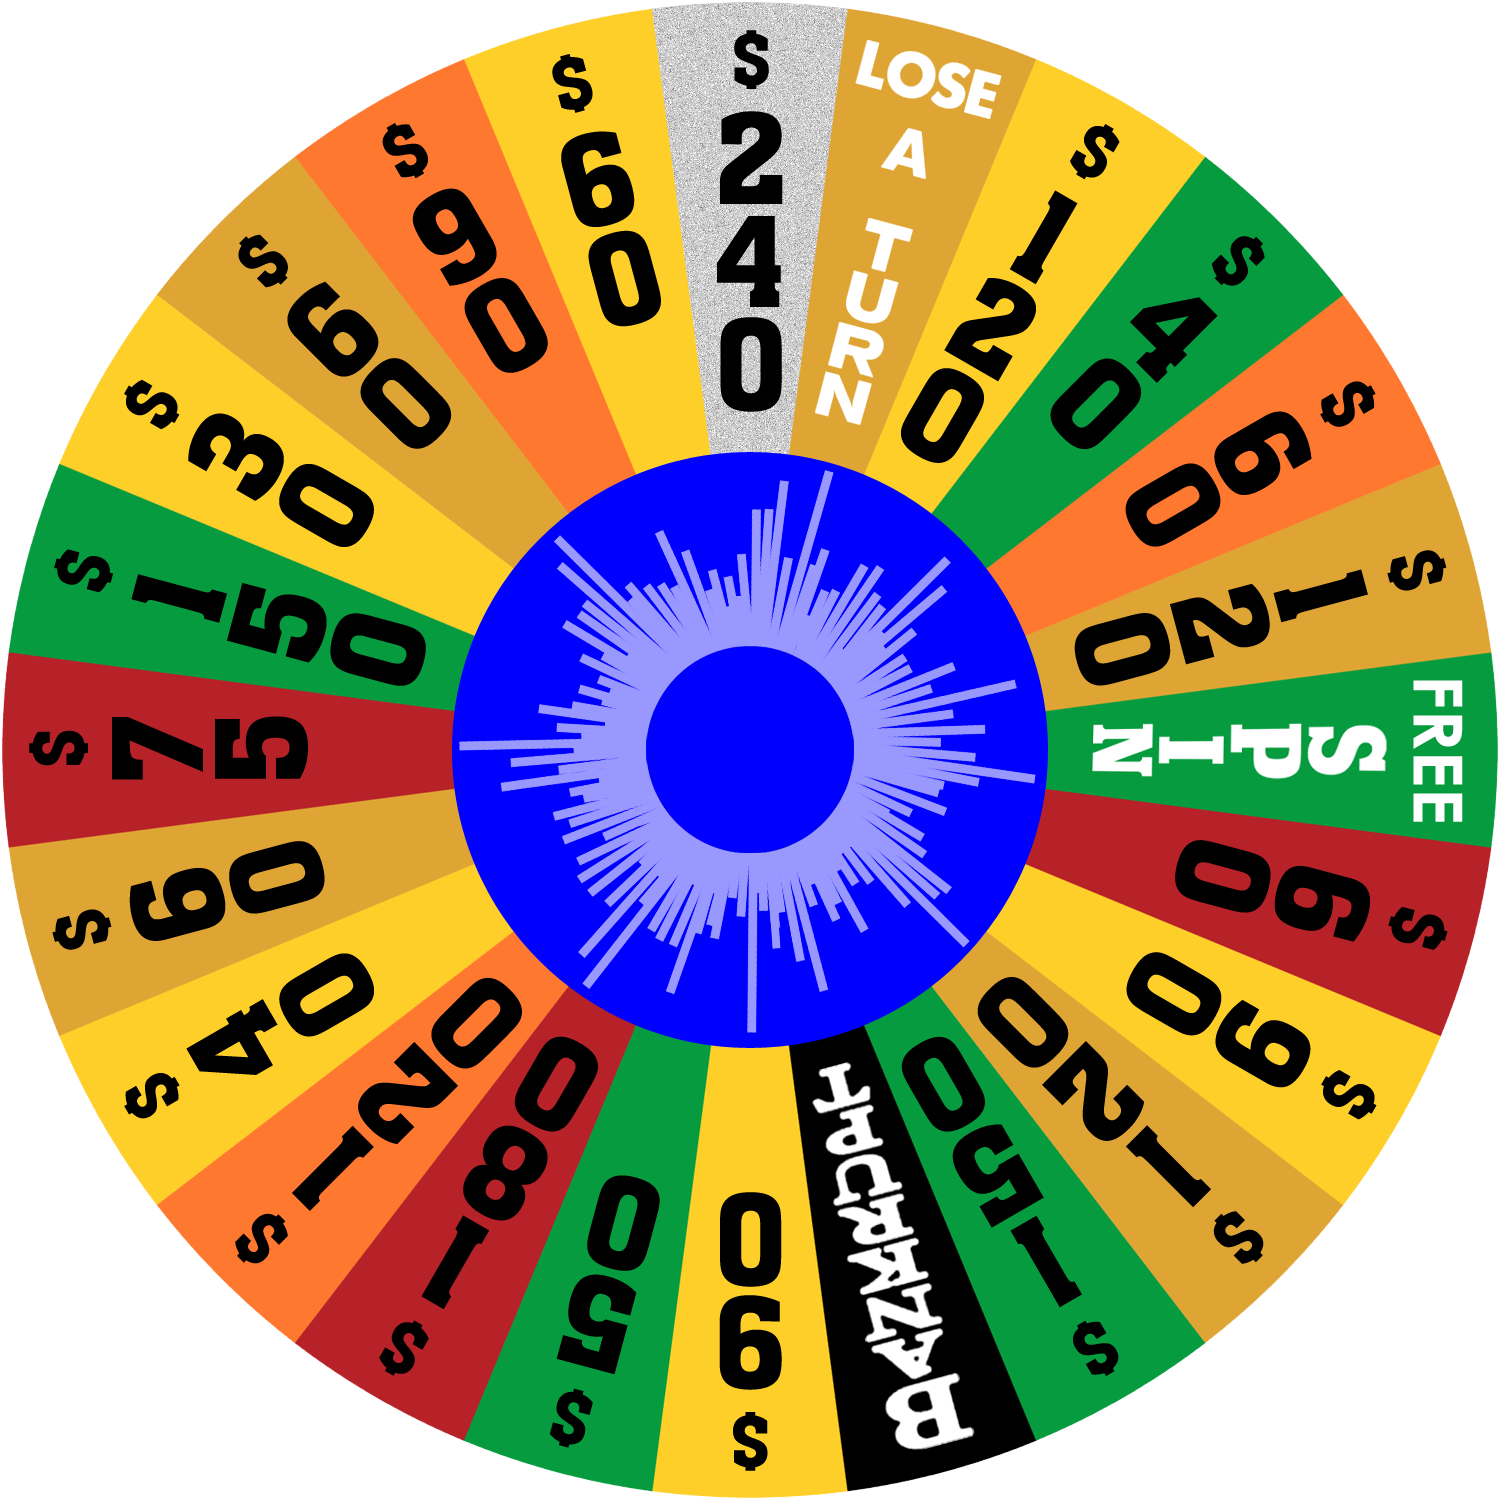 wheel of fortune logo 1980s